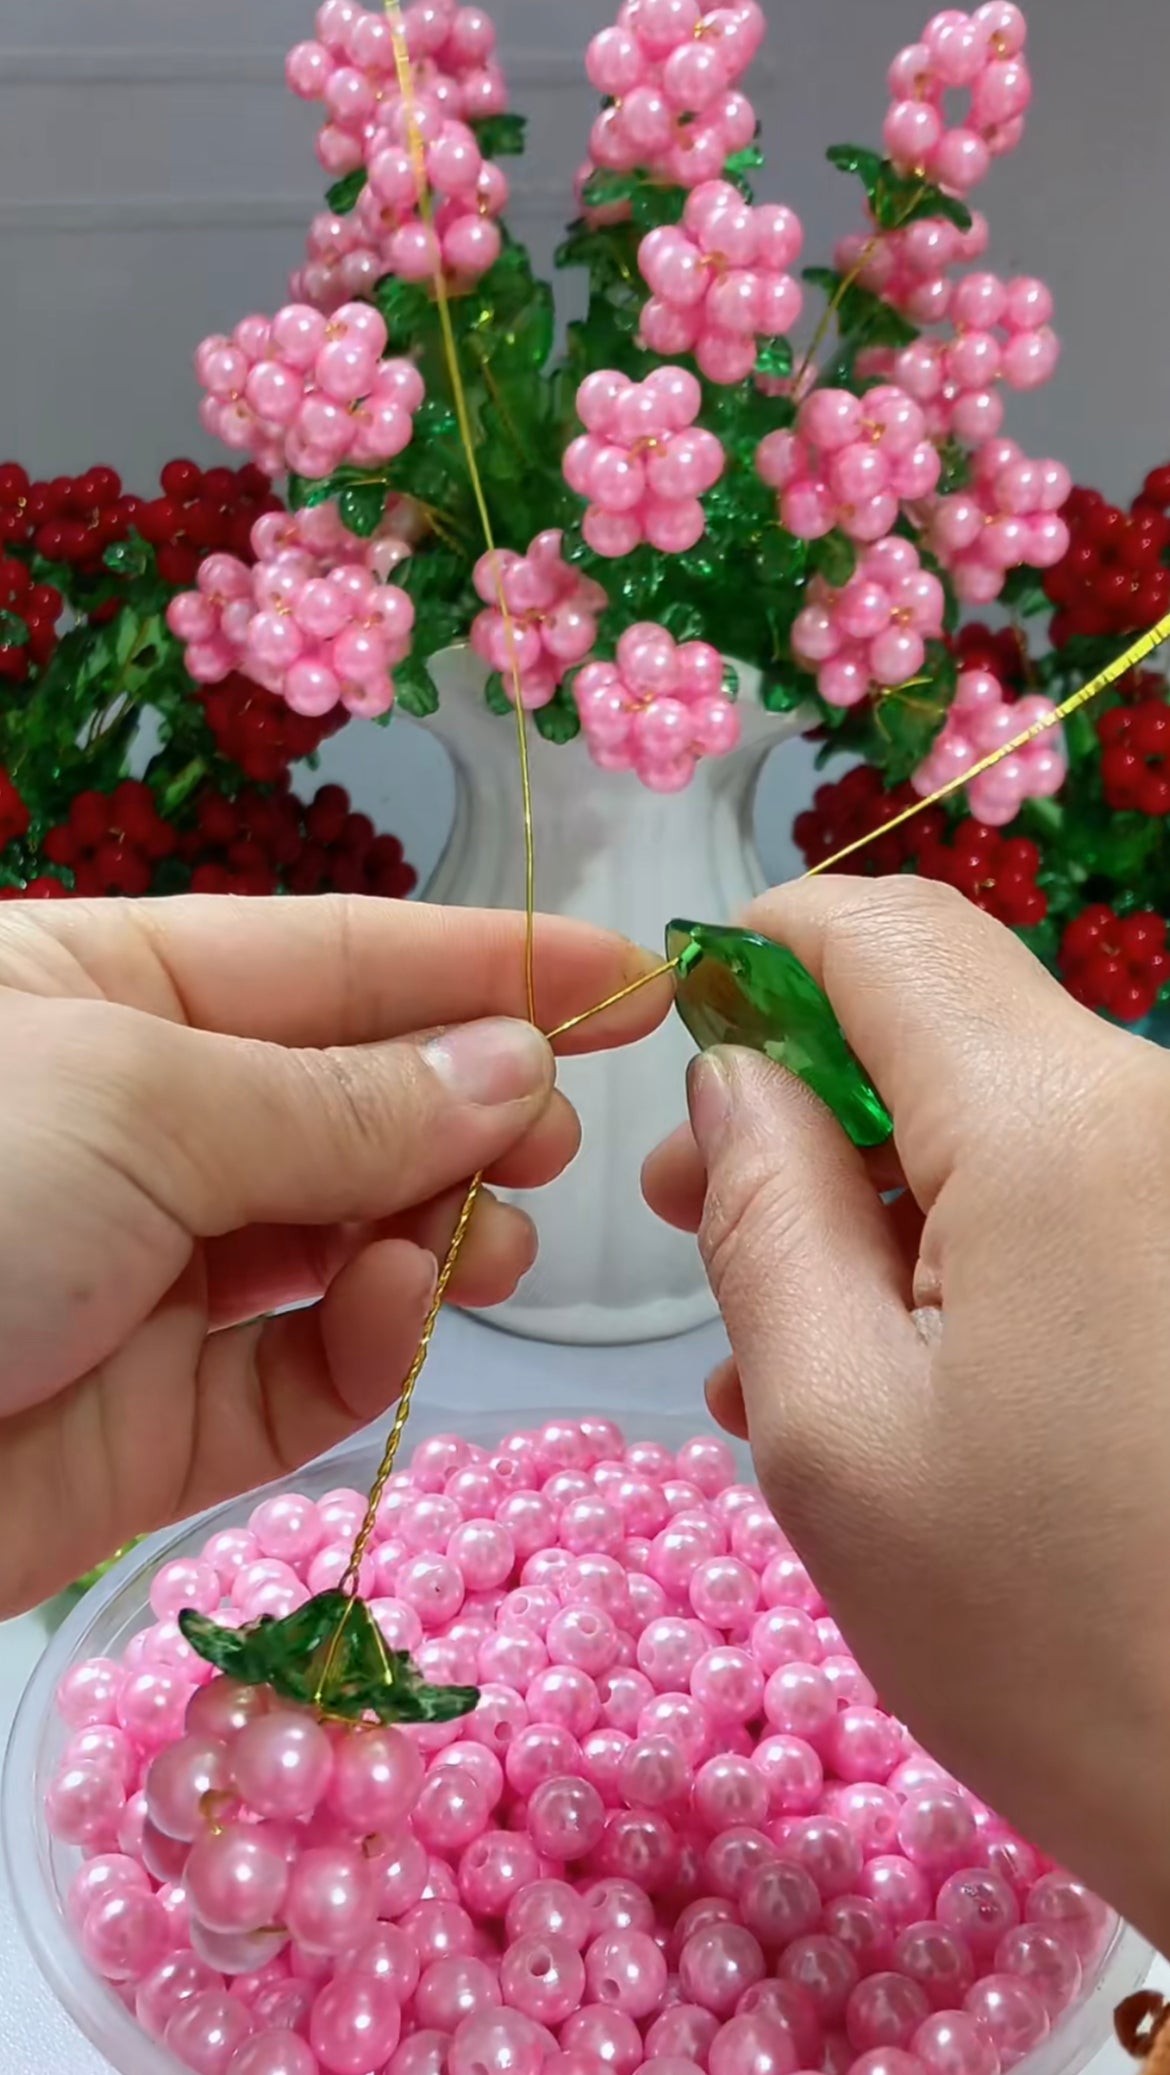 Buatan tangan diy buatan multil warna mutiara manik-manik kelopak bunga bahan baku aksesoris